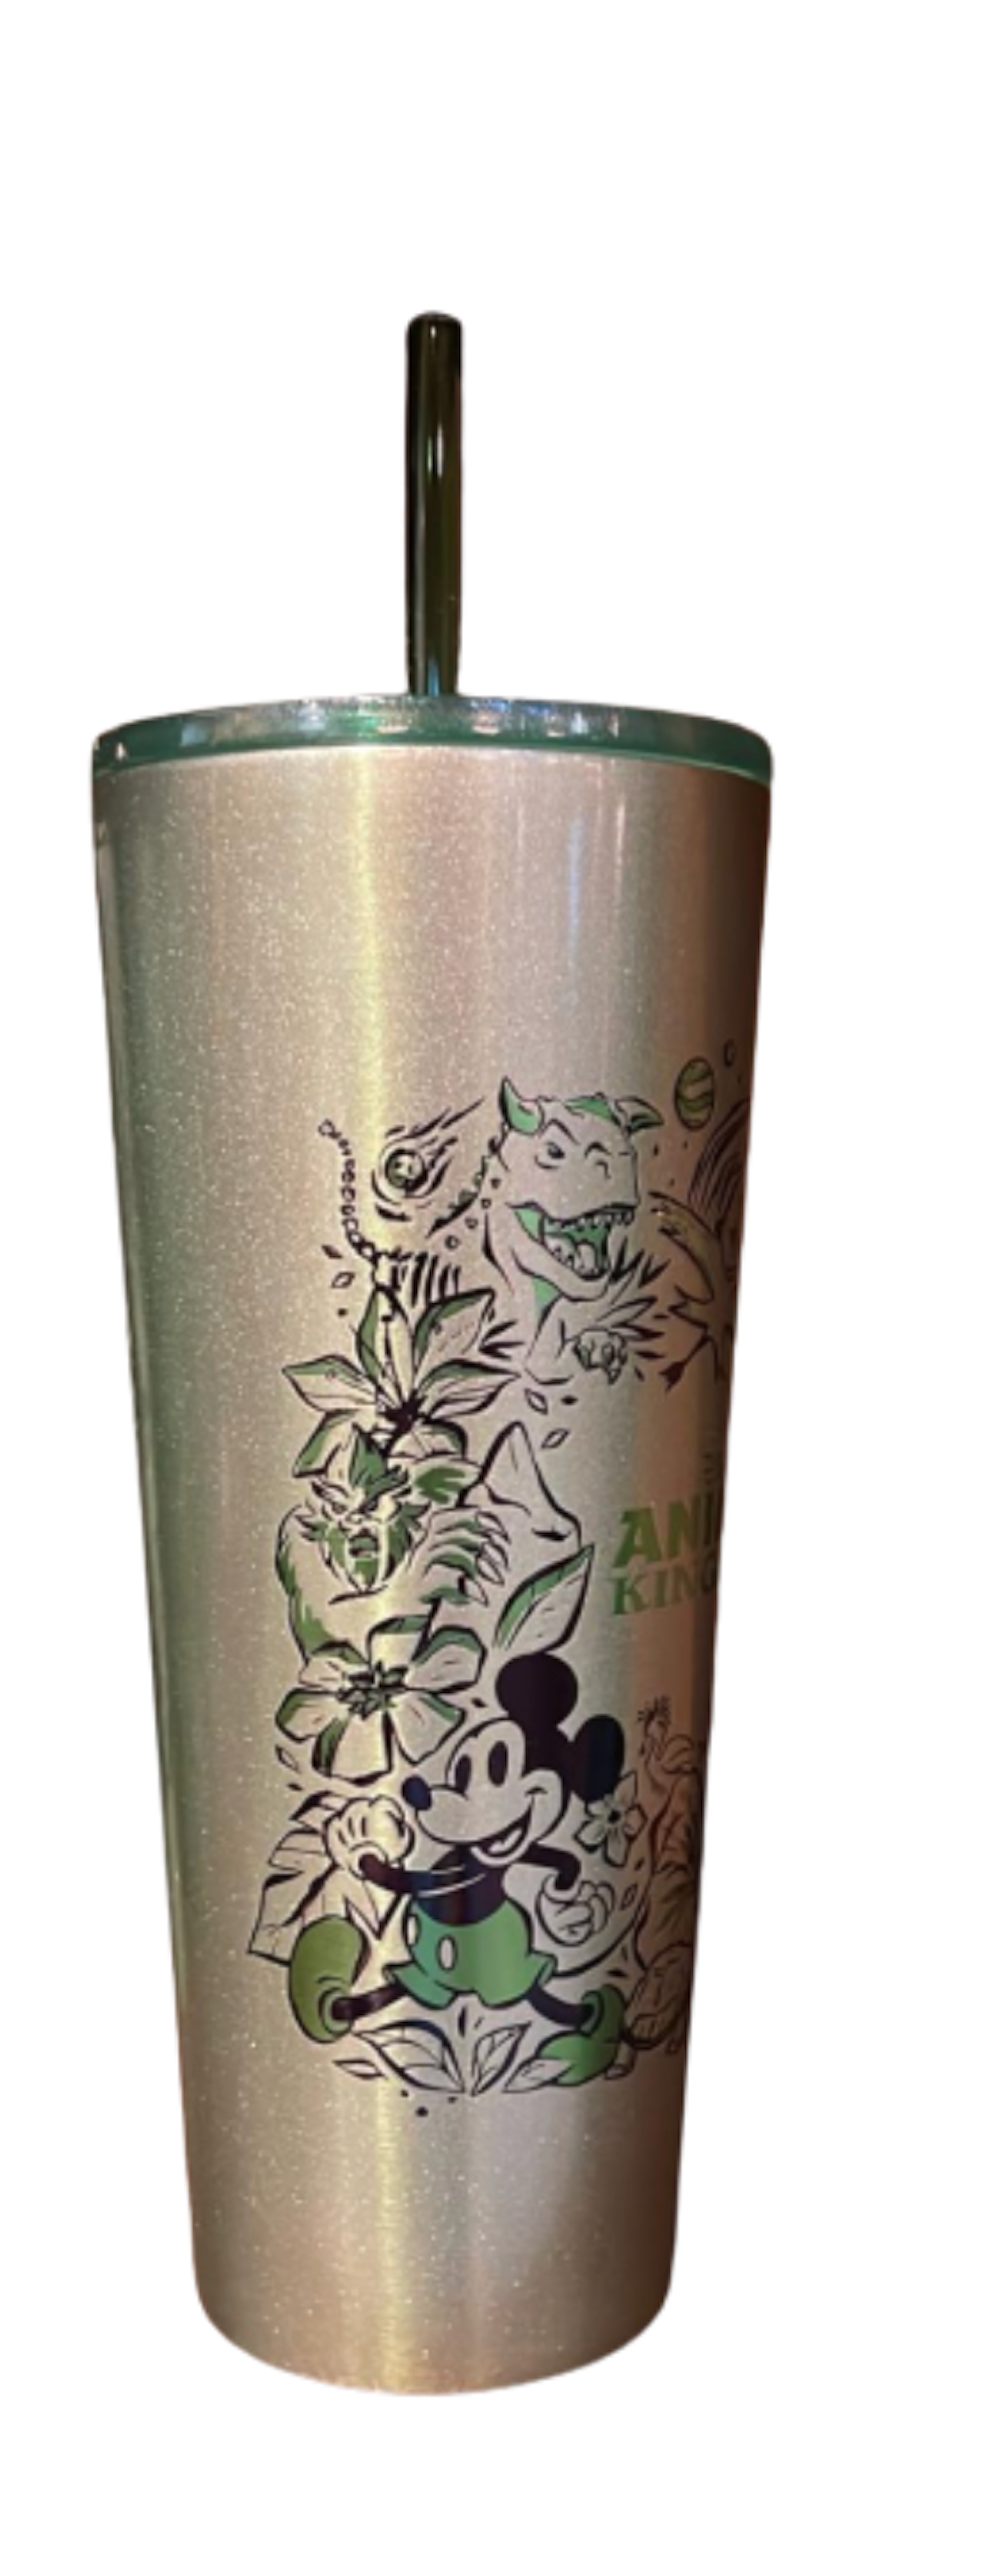 Disney Starbucks Animal Kingdom Icons Metal Tumbler Cup with Straw